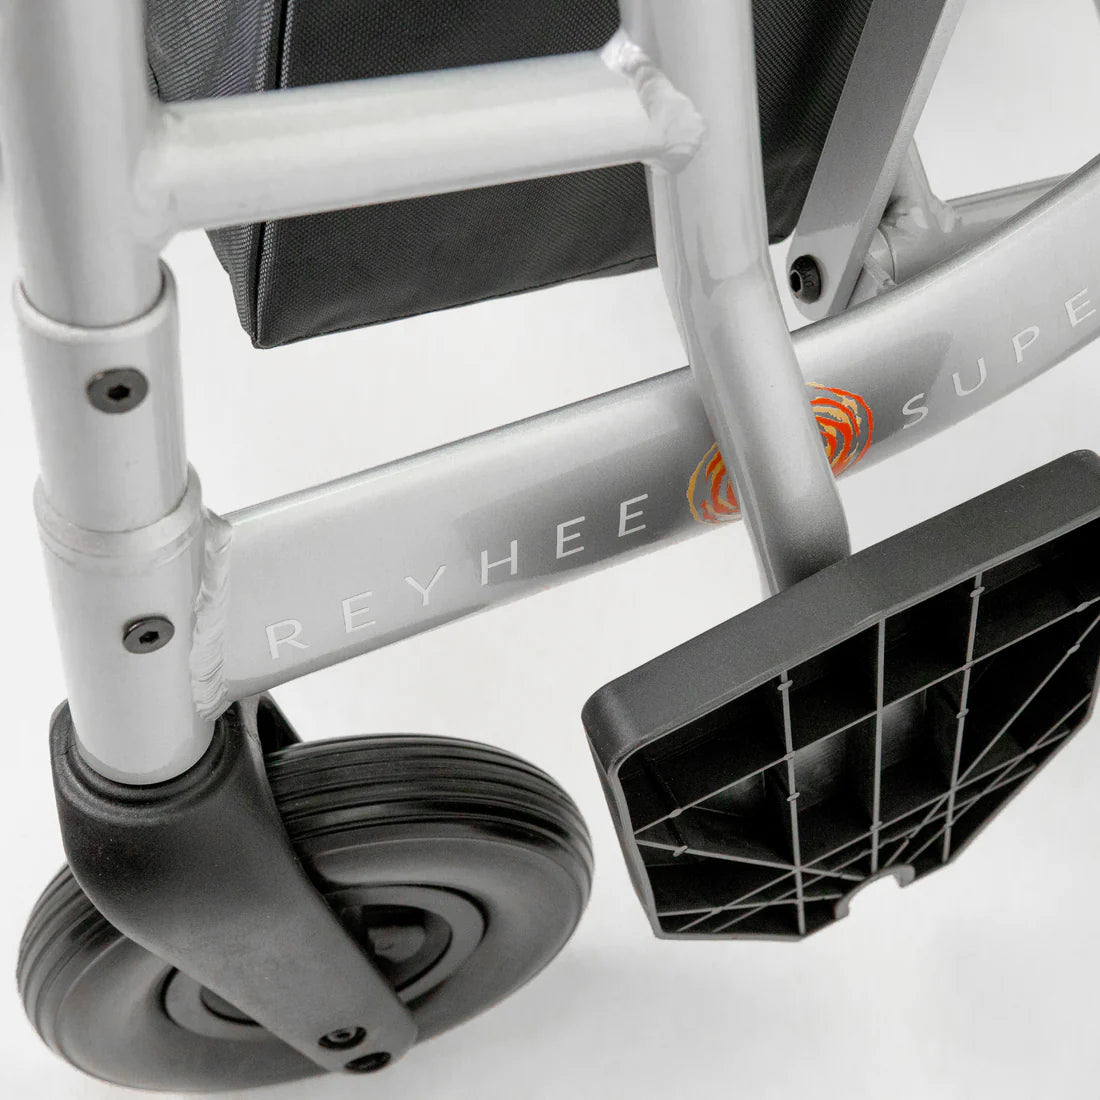 REYHEE Superlite Folding 3-in-1 Electric Wheelchair & Rollator